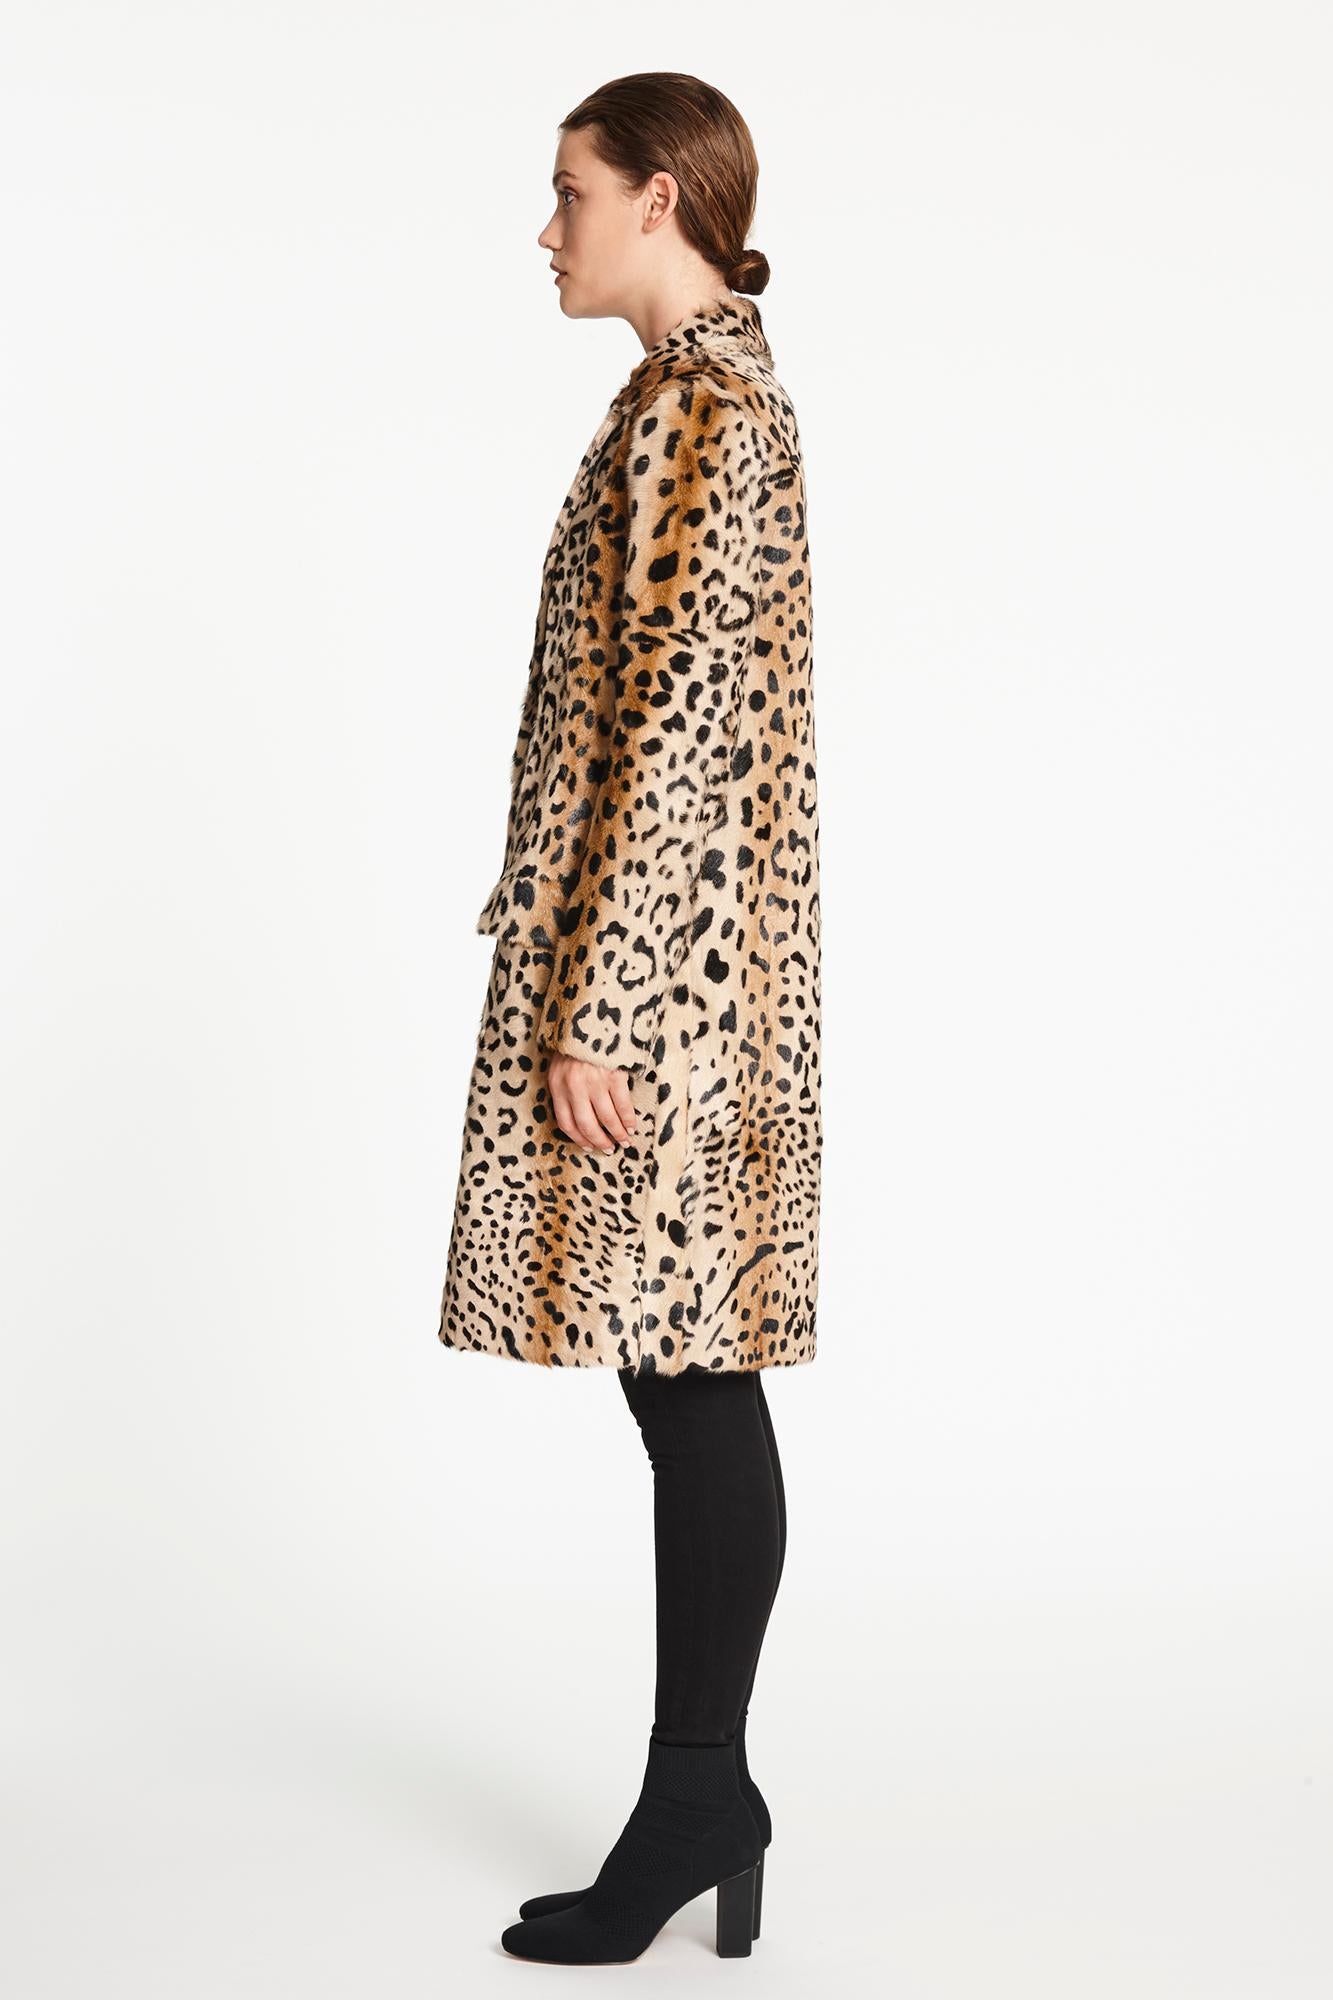 Verheyen London Leopard Print Coat in Red Ruby Goat Hair Fur UK 10 - Brand New  For Sale 5